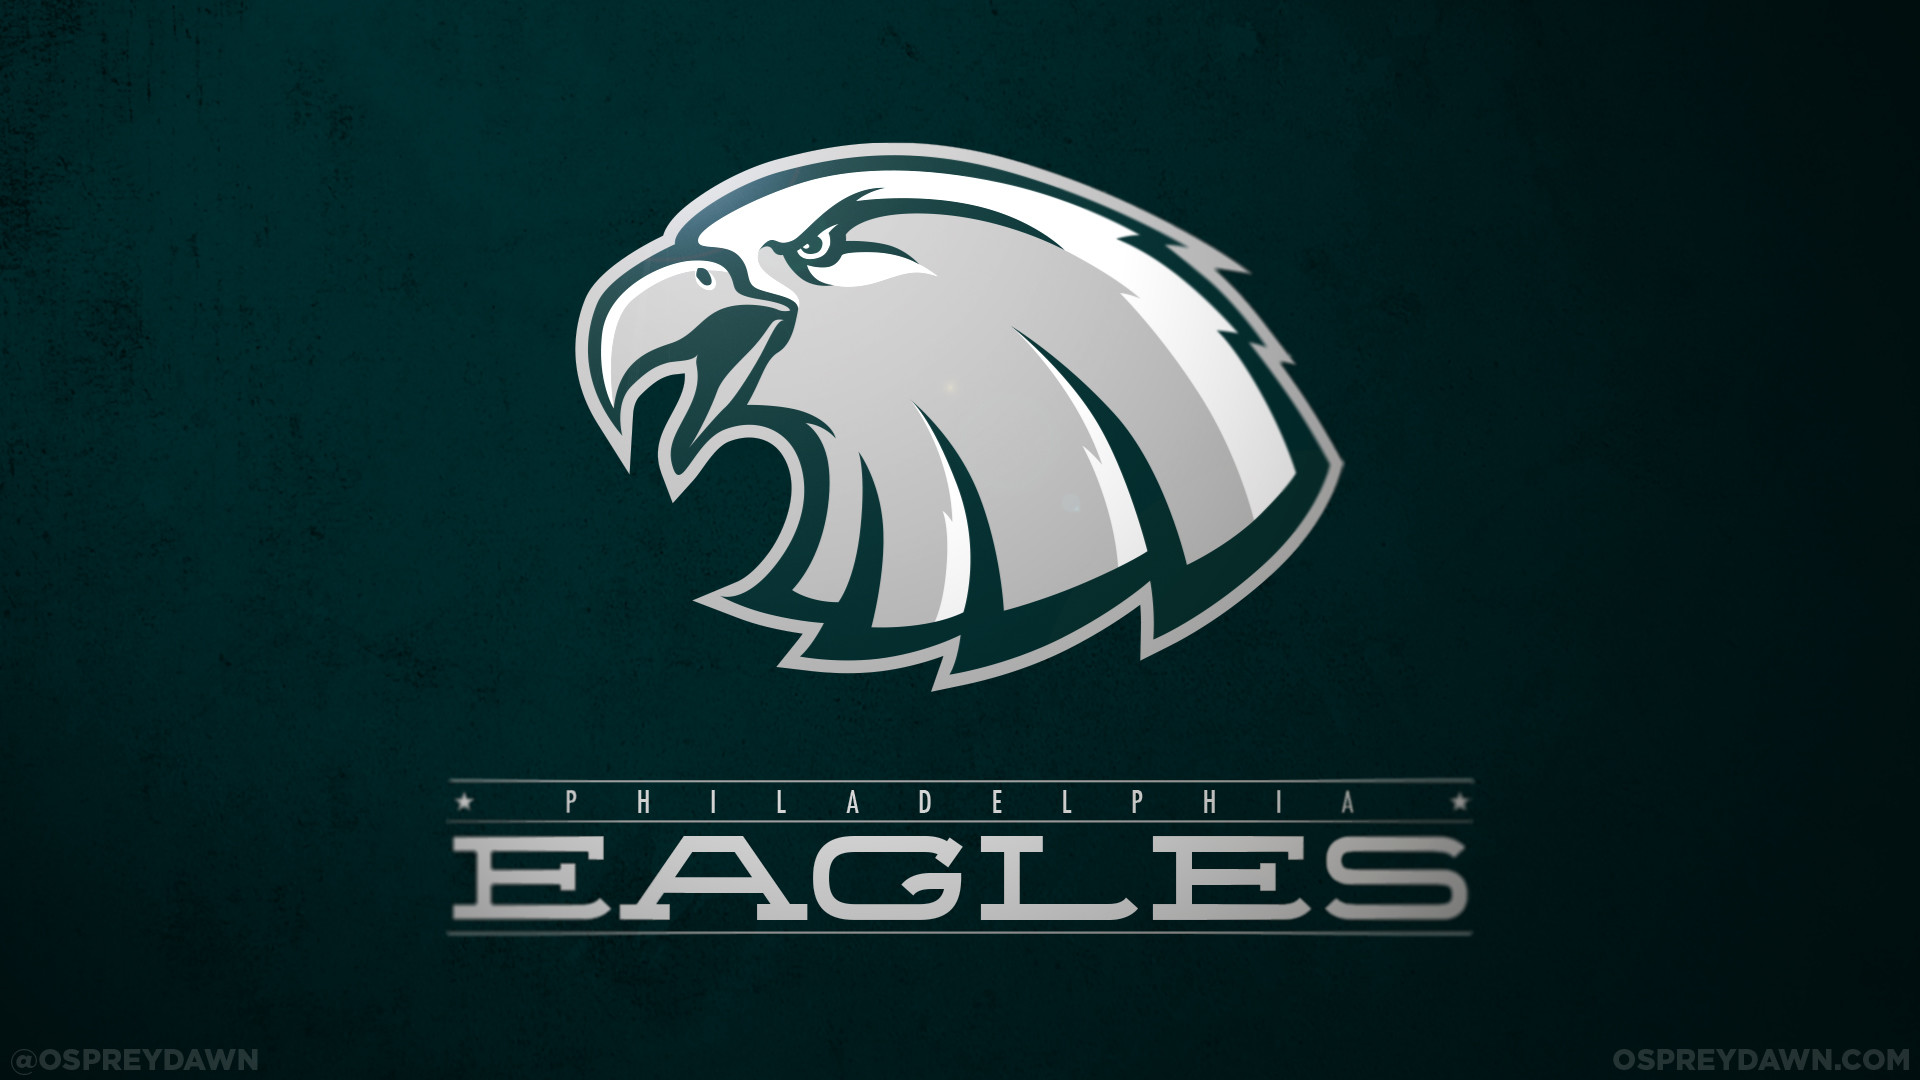 1920x1080 The Philadelphia Eagles - Osprey Dawn